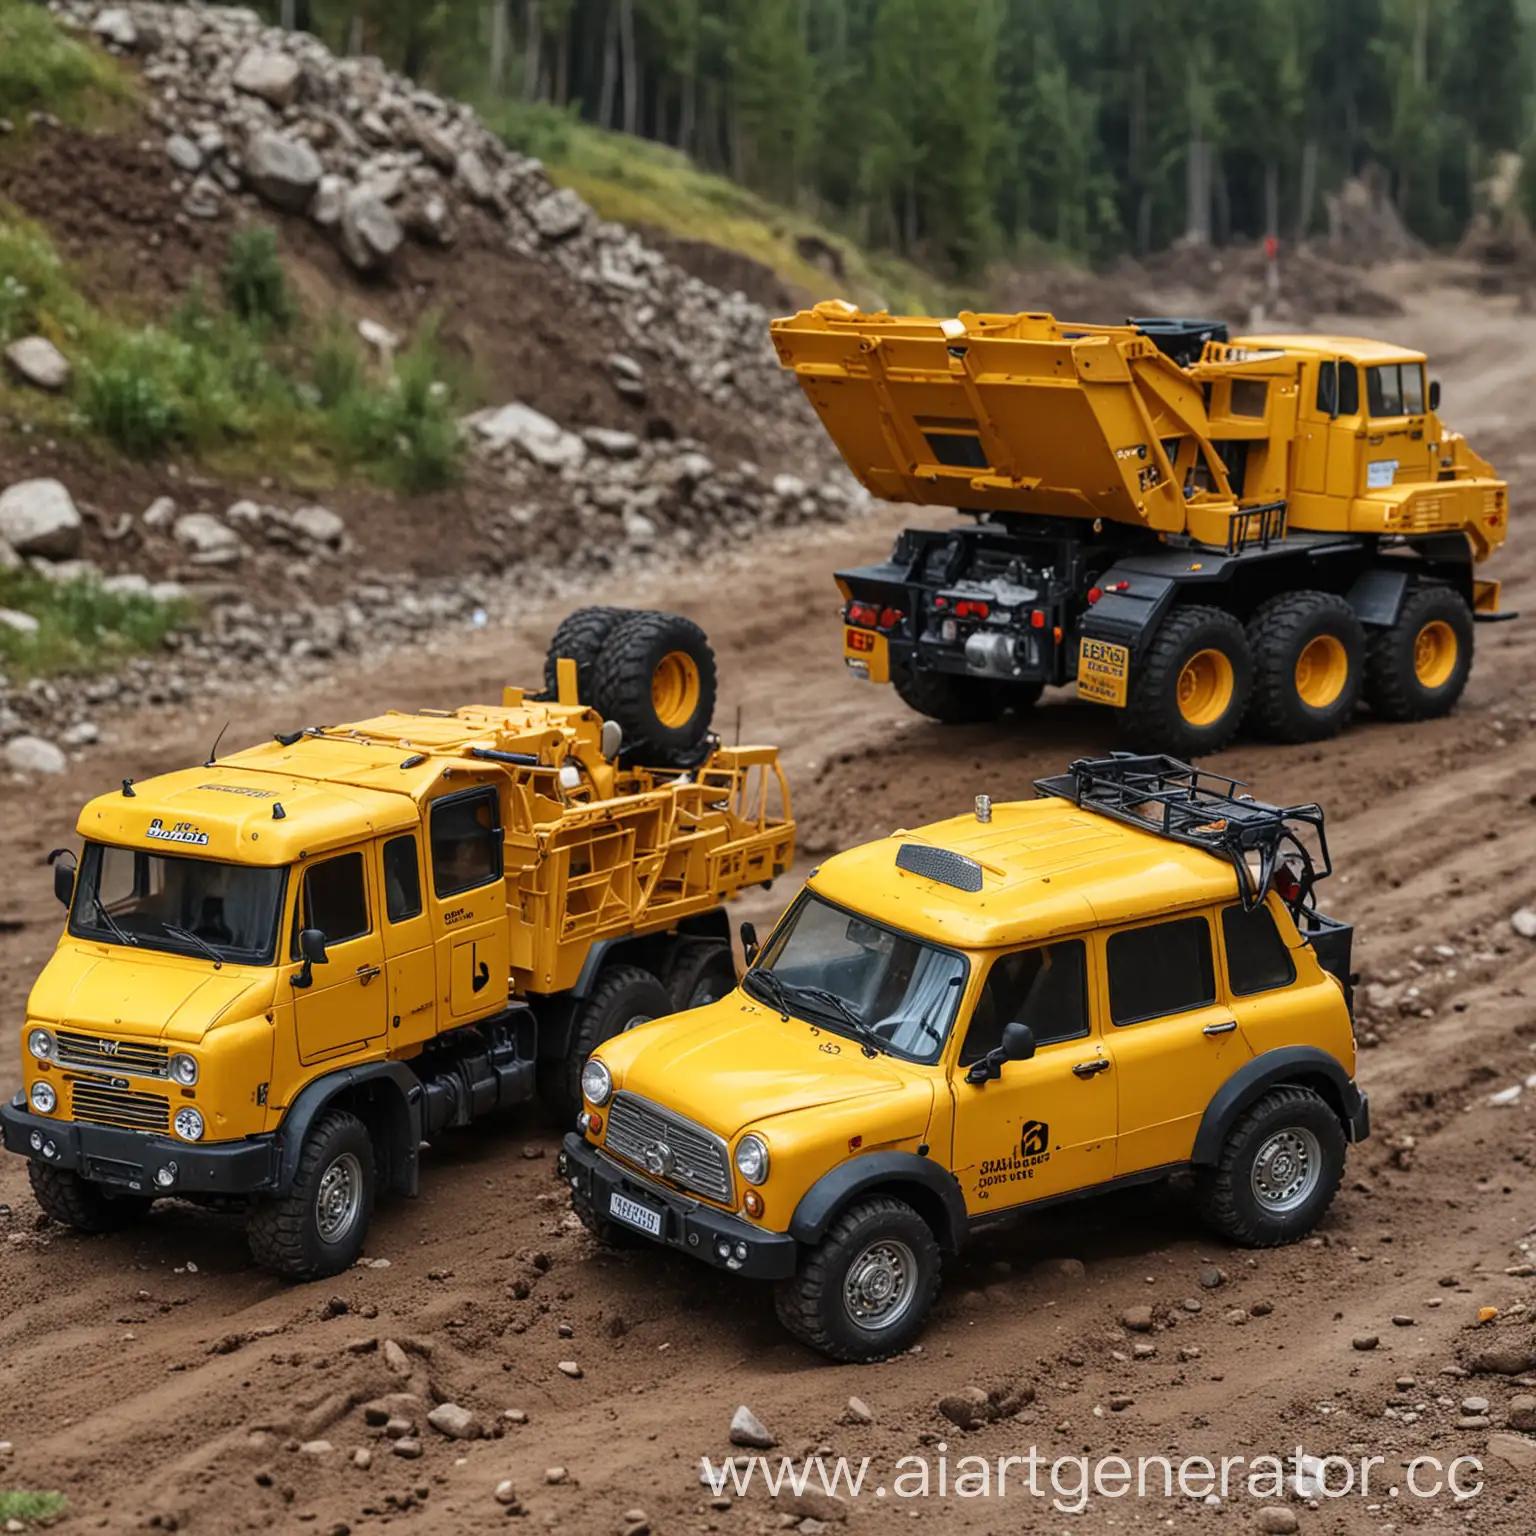 Contrasting-Sizes-BelAZ-Mining-Truck-Towering-Over-Mini-Cooper